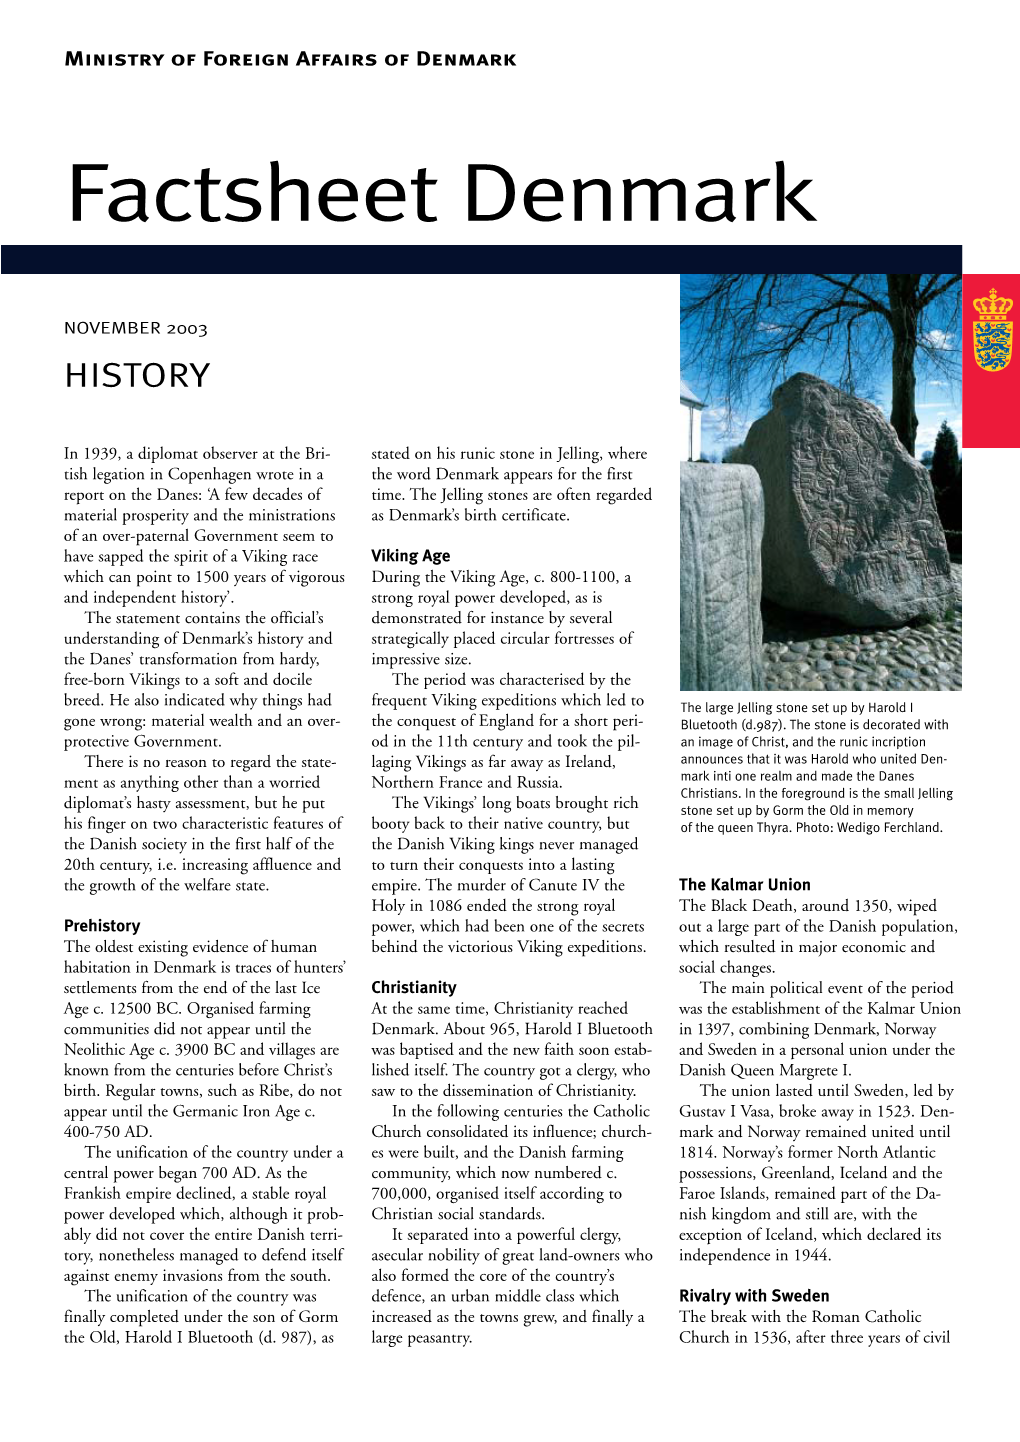 Factsheet Denmark History